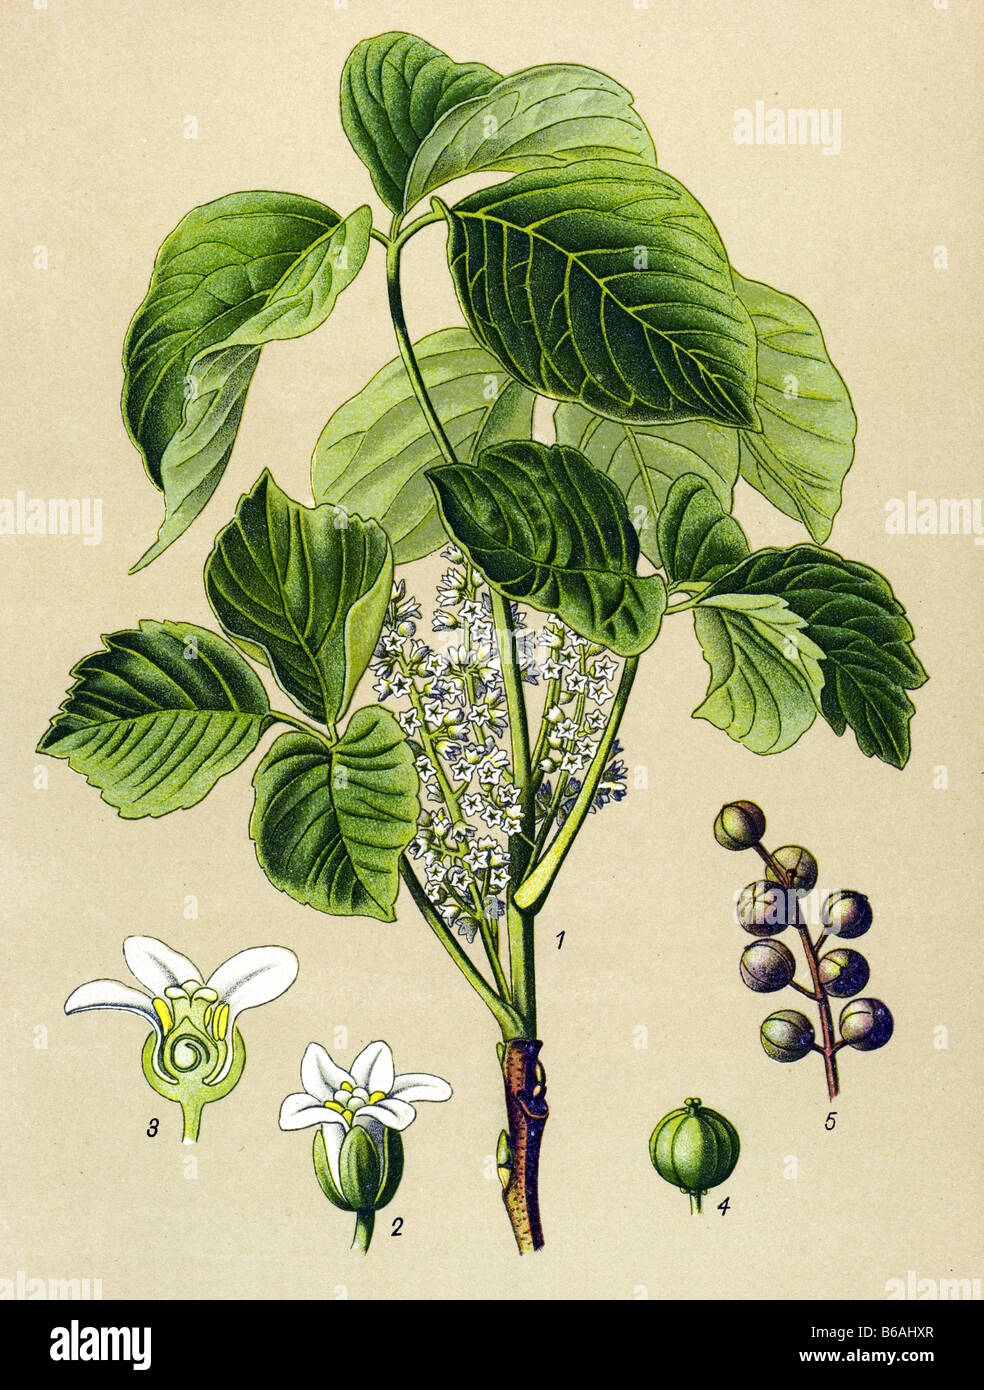 Sumac, Rhus toxicodendron poisonous plants illustrations Stock Photo